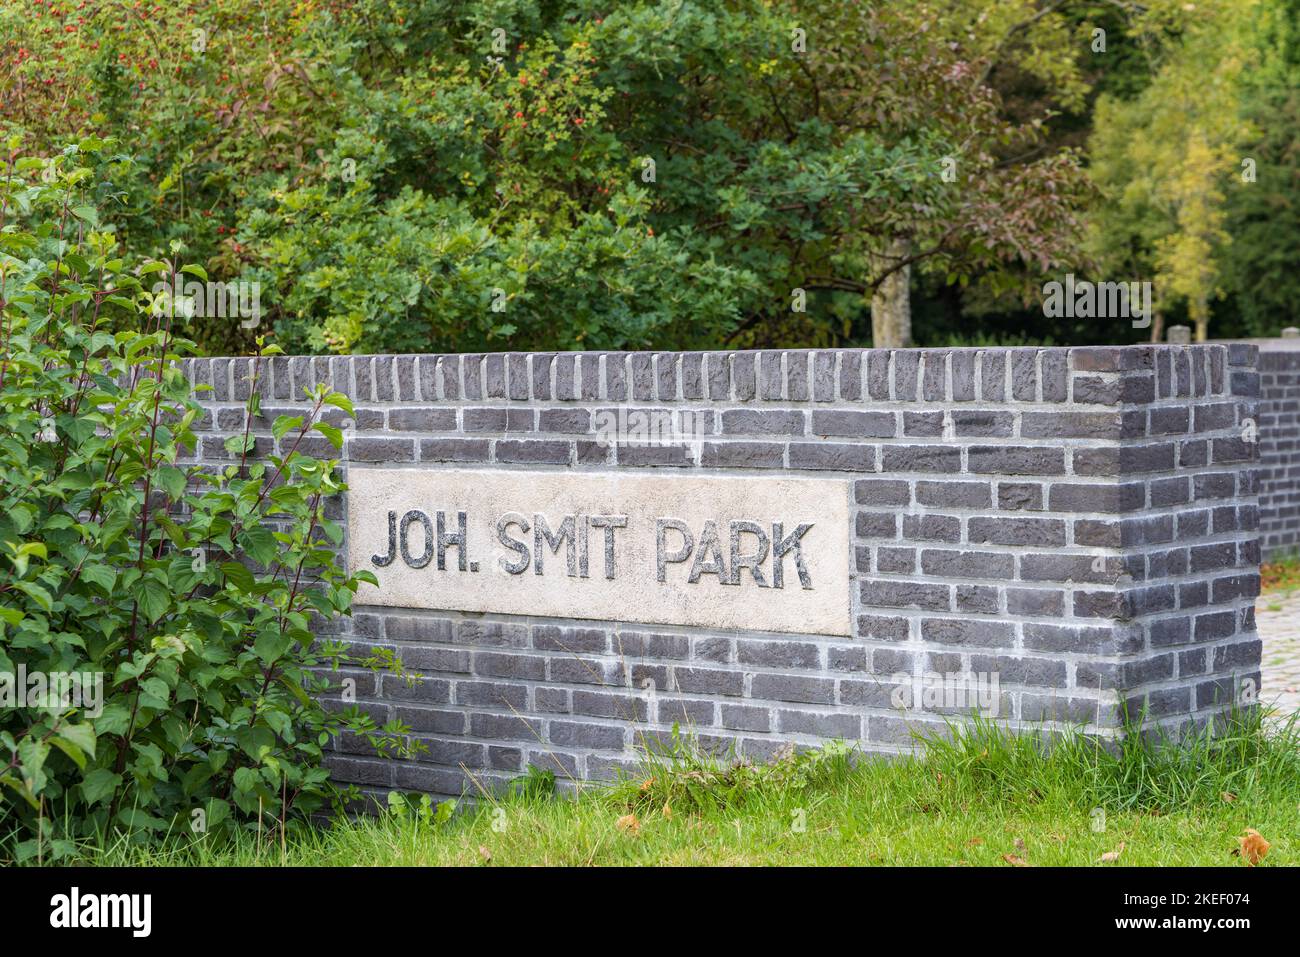 Zuidhorn, The Netherlands - September 25, 2022: Park sign Johan Smitpark in Zuidhorn, municipality Westerkwartier Groningen province in the Netherland Stock Photo